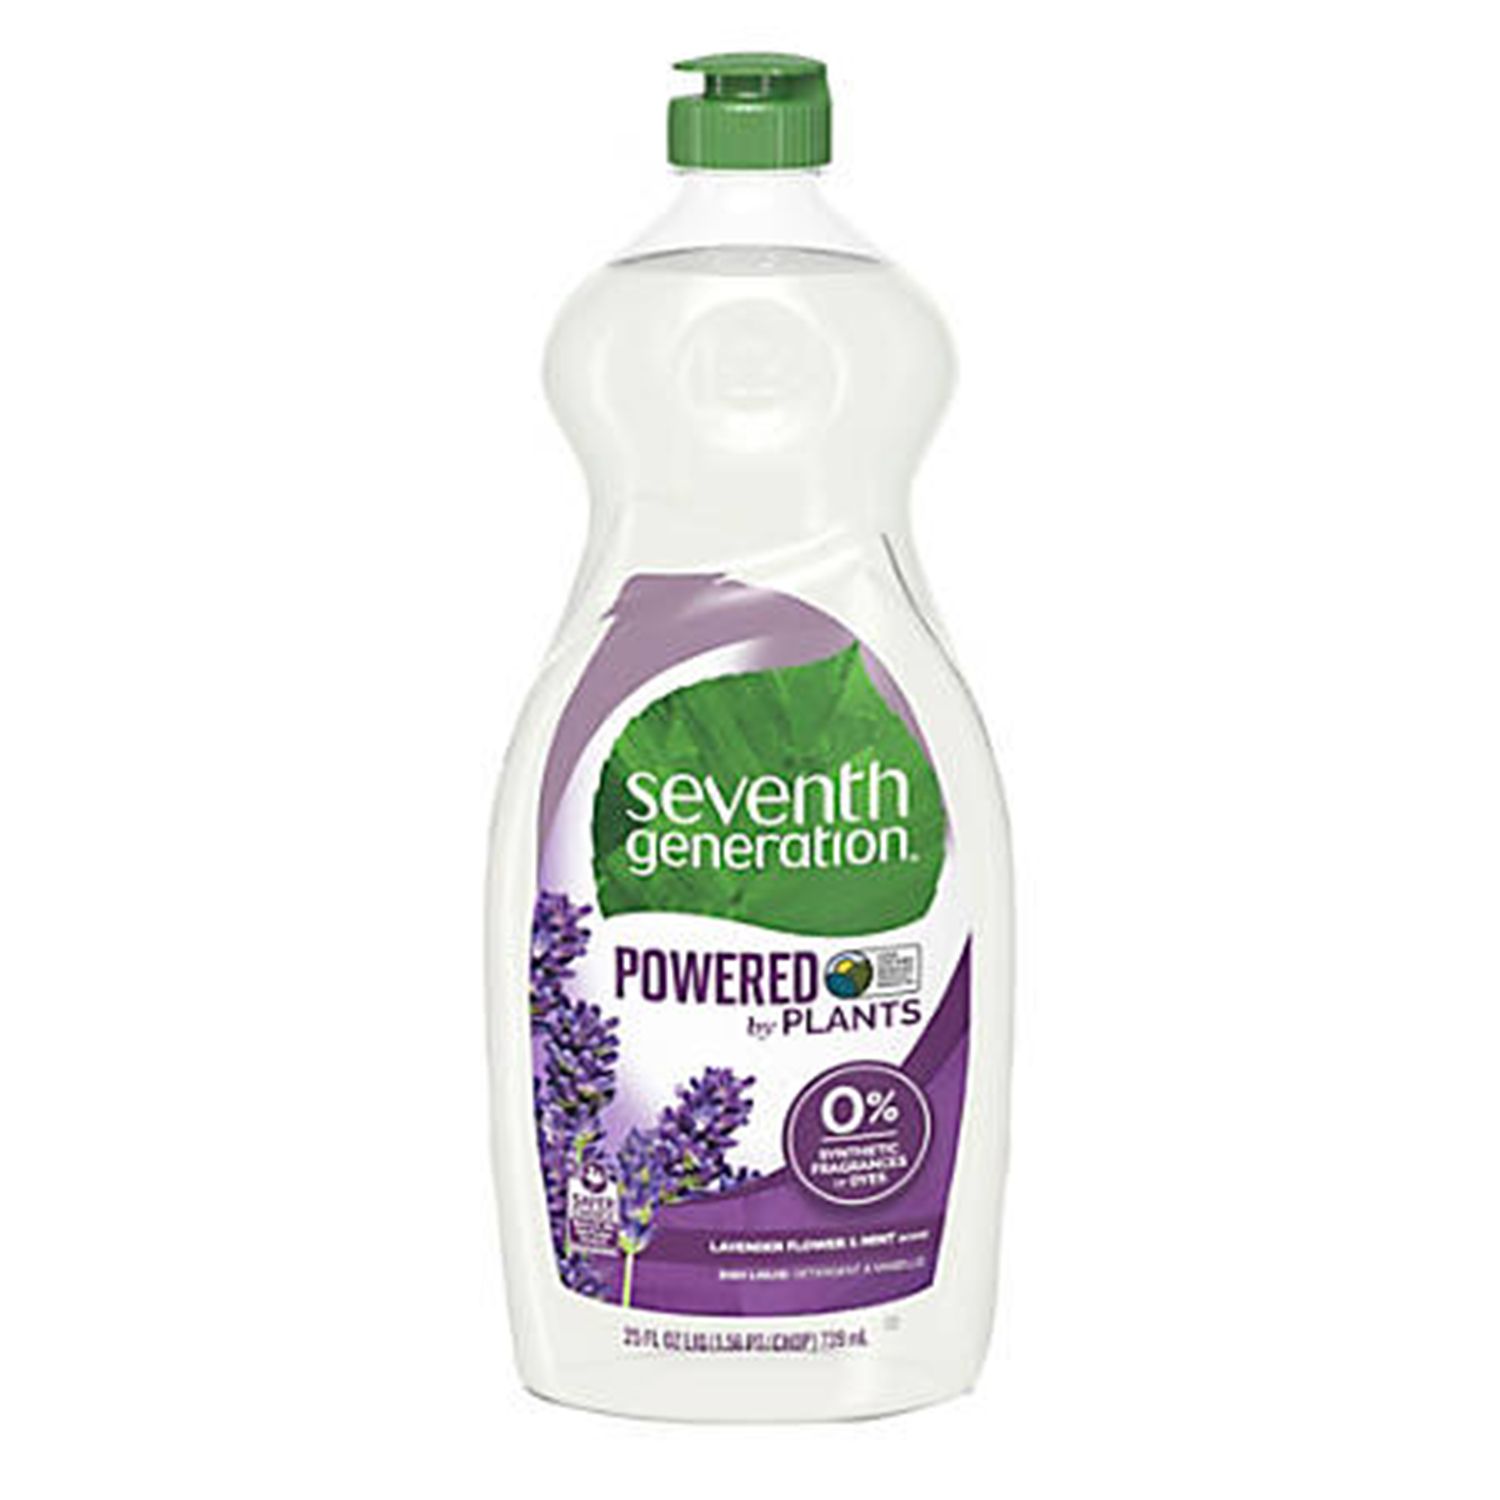 Syvende generation Natural Dish Liquid, 25 Oz., Lavendel / Mint